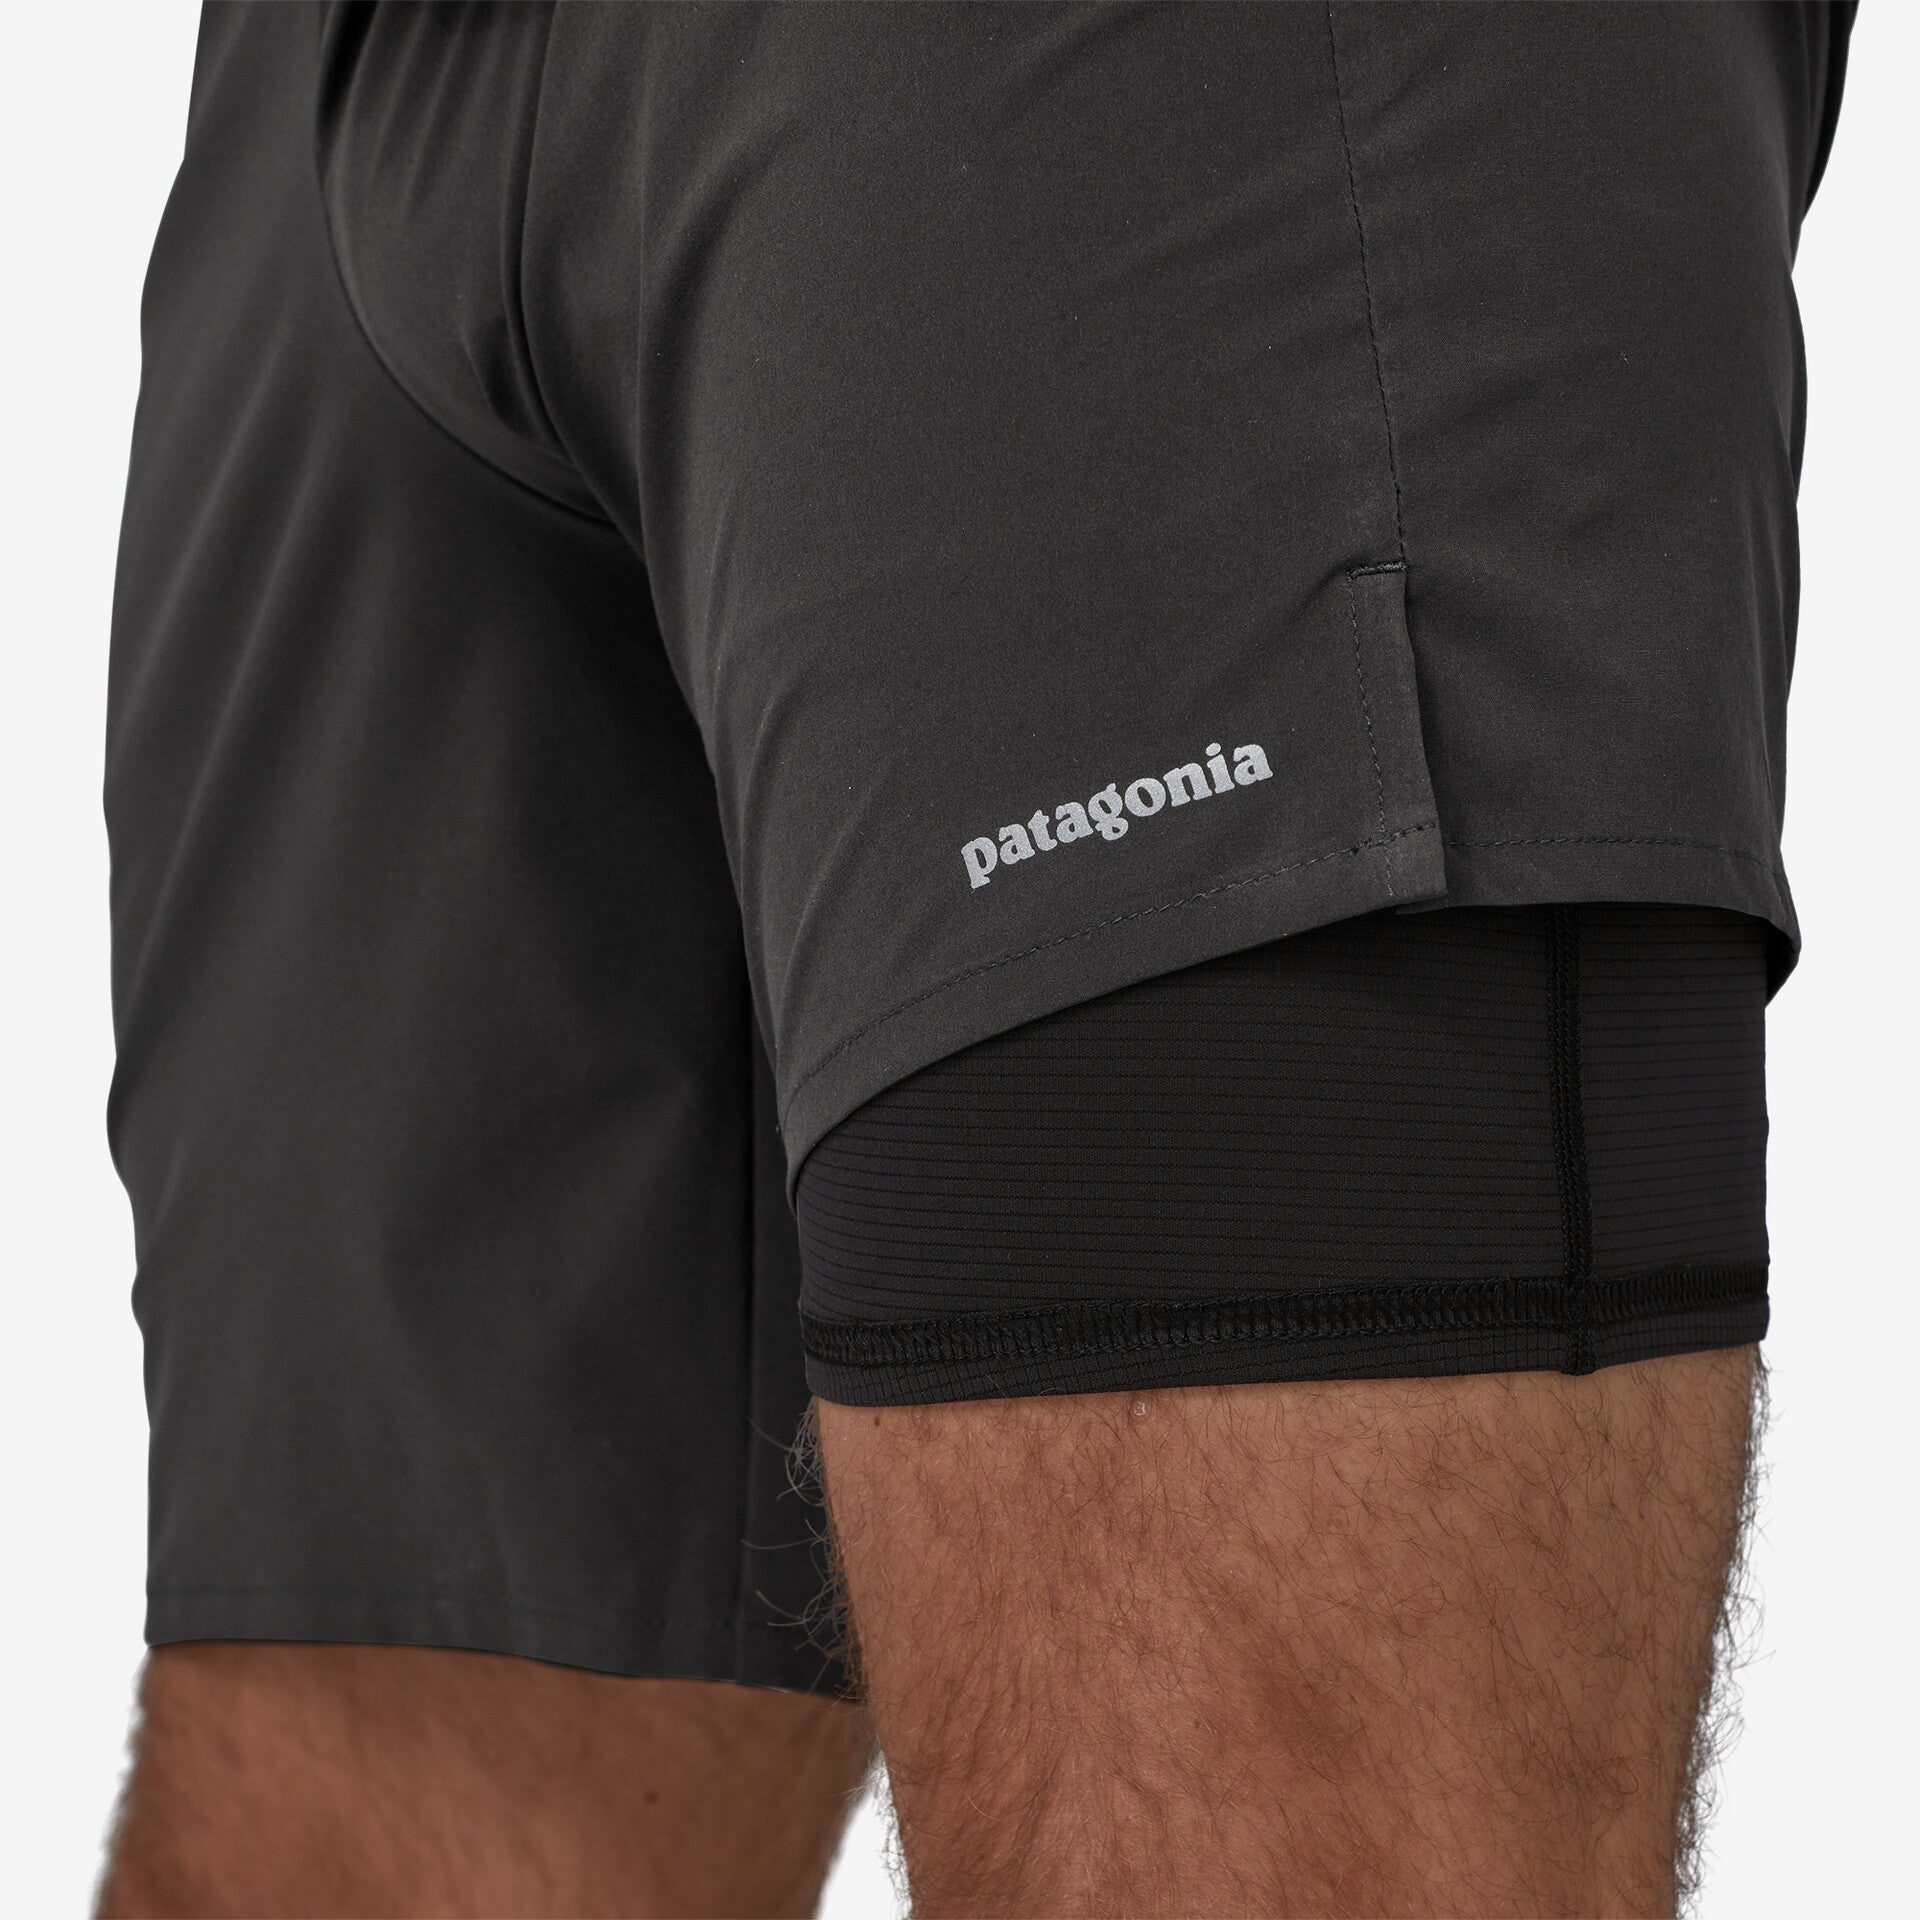 PATAGONIA Multi Trails Shorts 8" - Men's